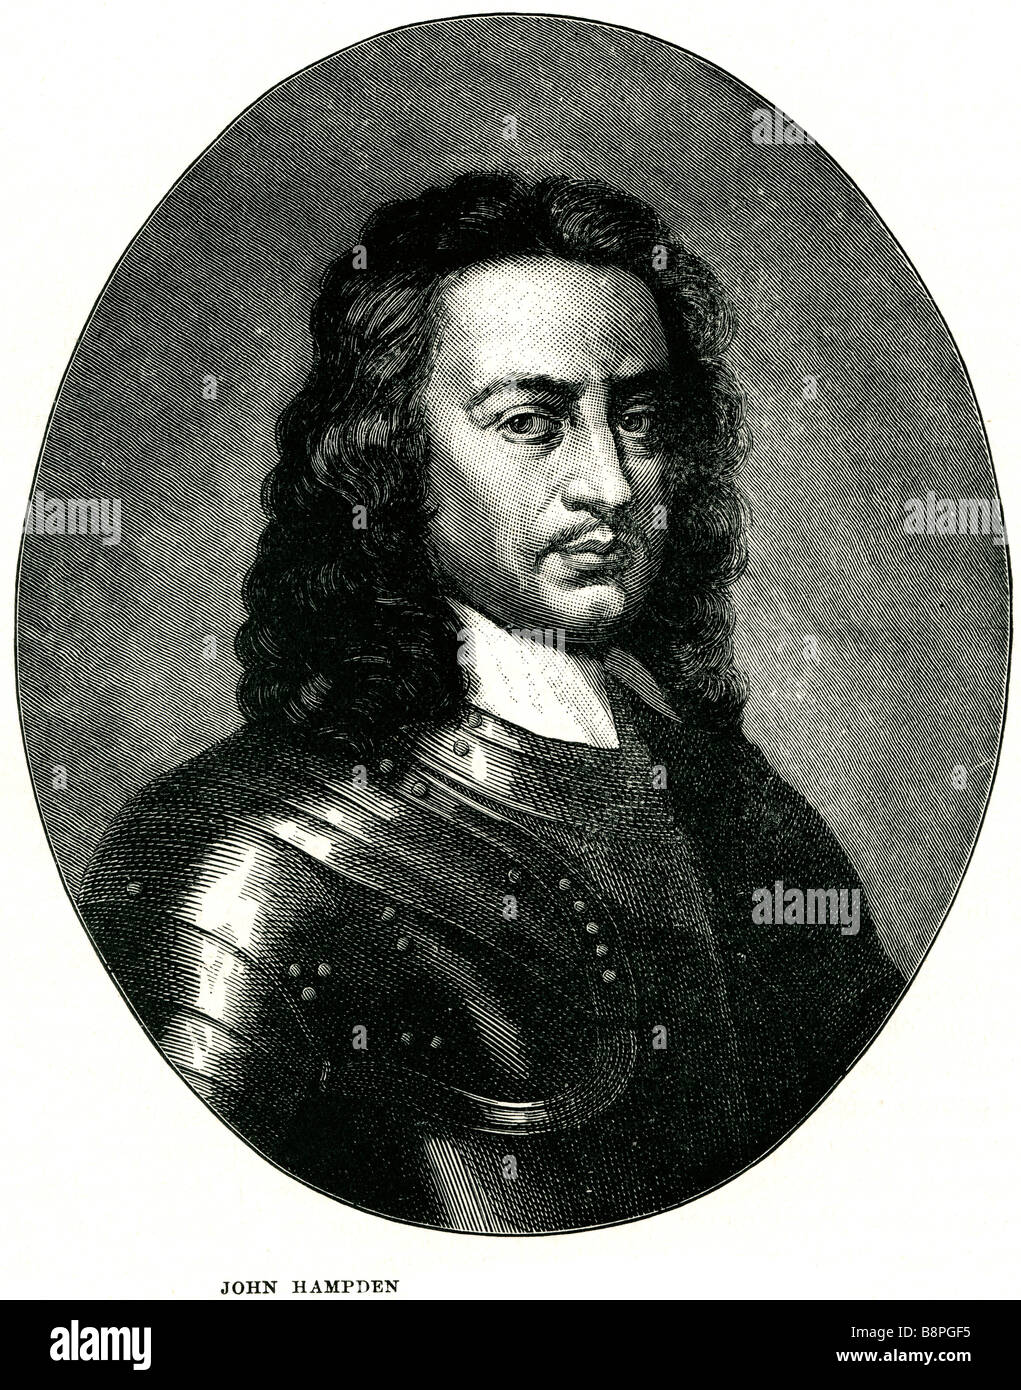 John Hampden (c. 1595 – 1643) was an English politician, the eldest son of William Hampden, of Hampden House, Great Hampden in B Stock Photo